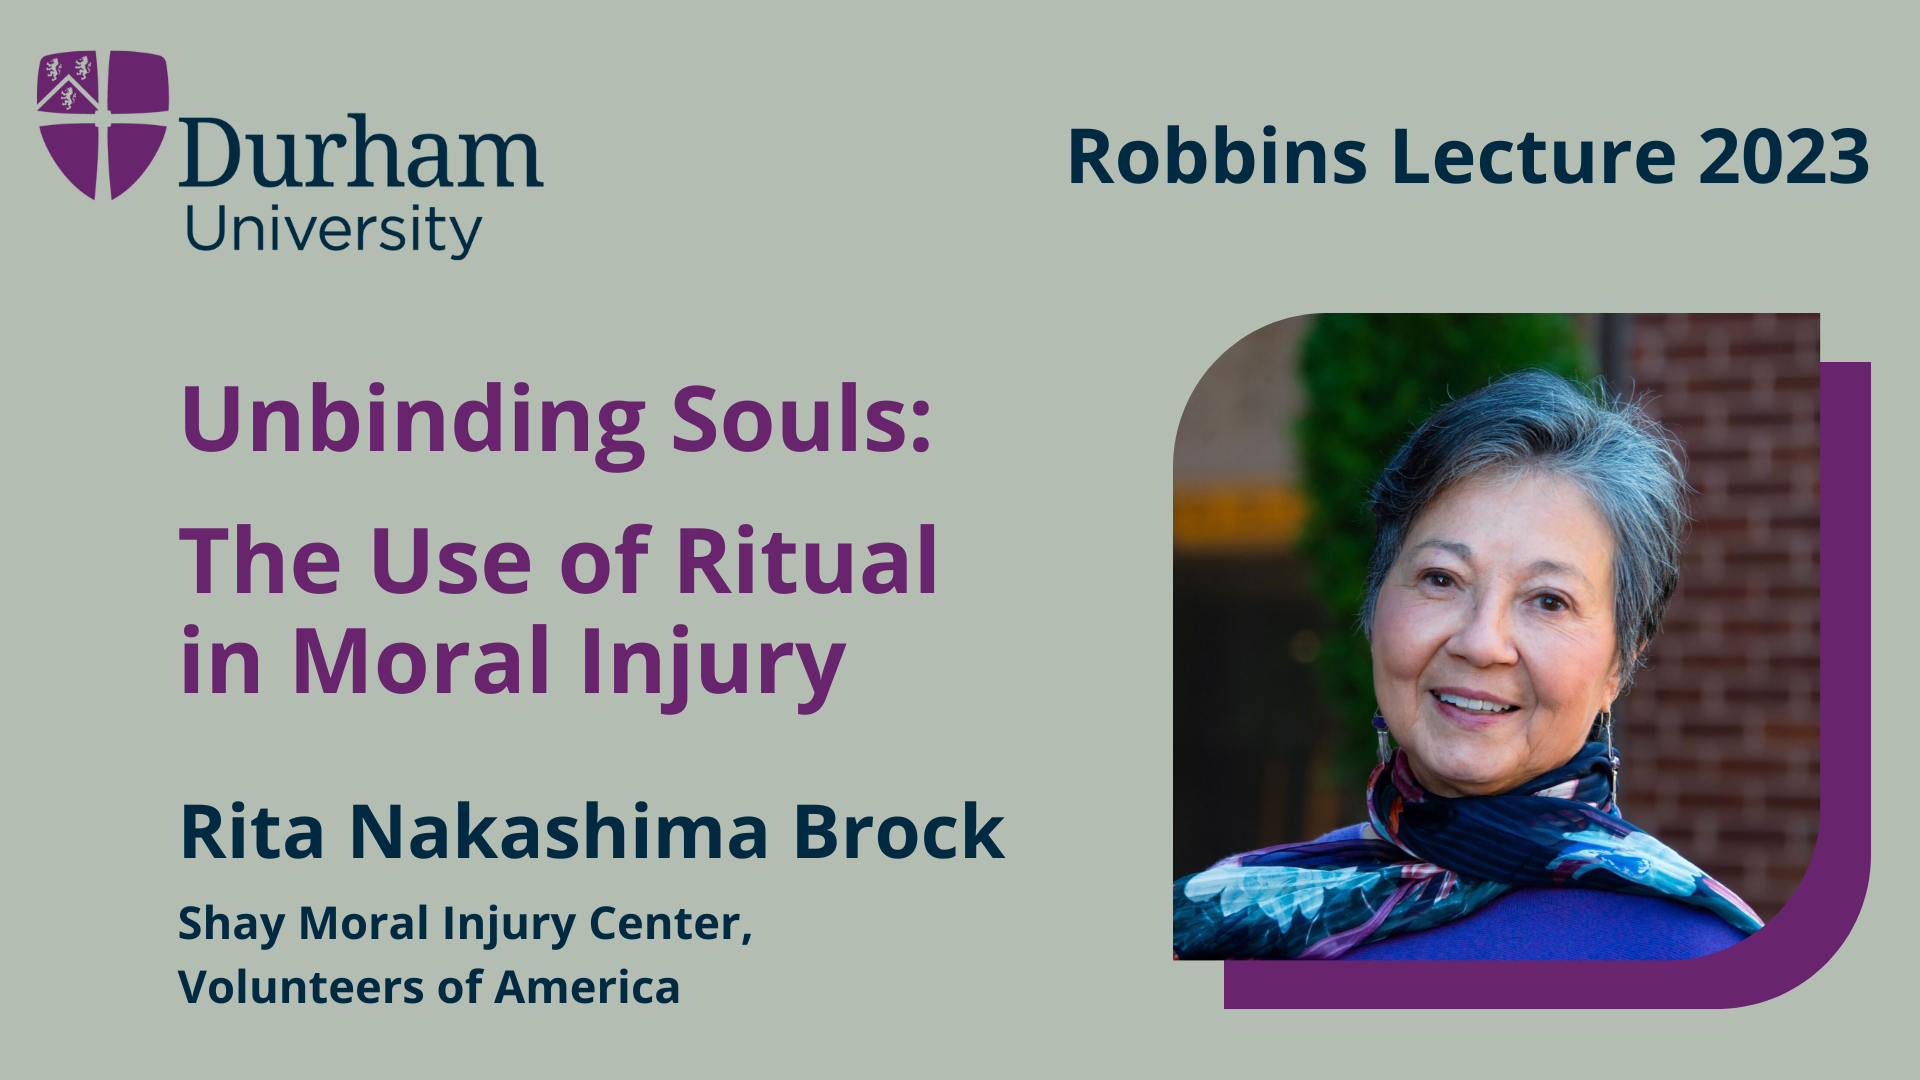 Unbinding Souls: The Use of Ritual in Moral Injury, by Rita Nakashima Brock